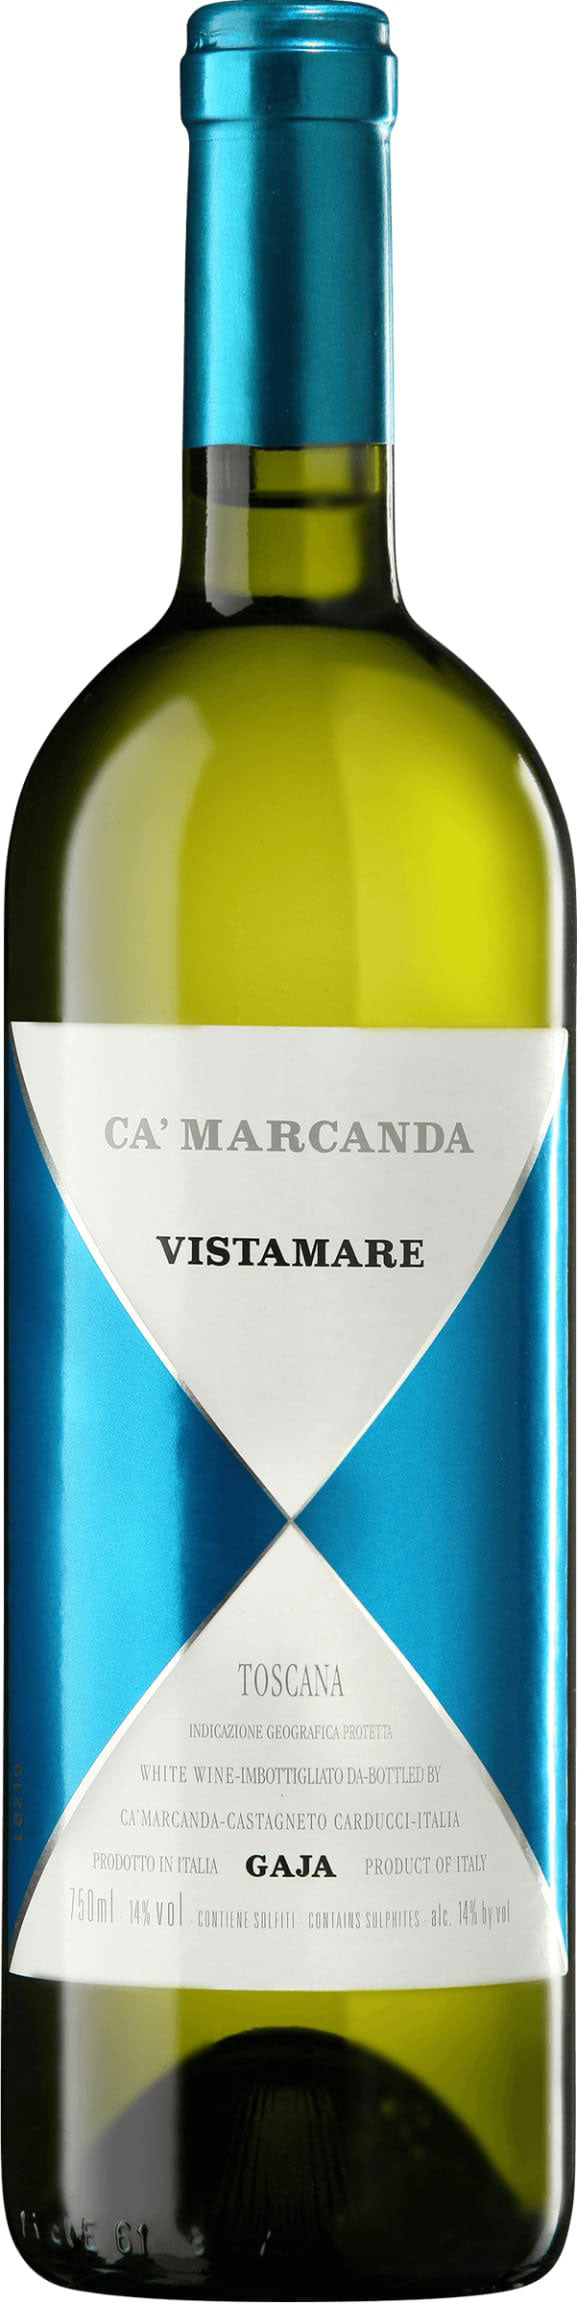 Gaja Ca' Marcanda Vistamare 2018